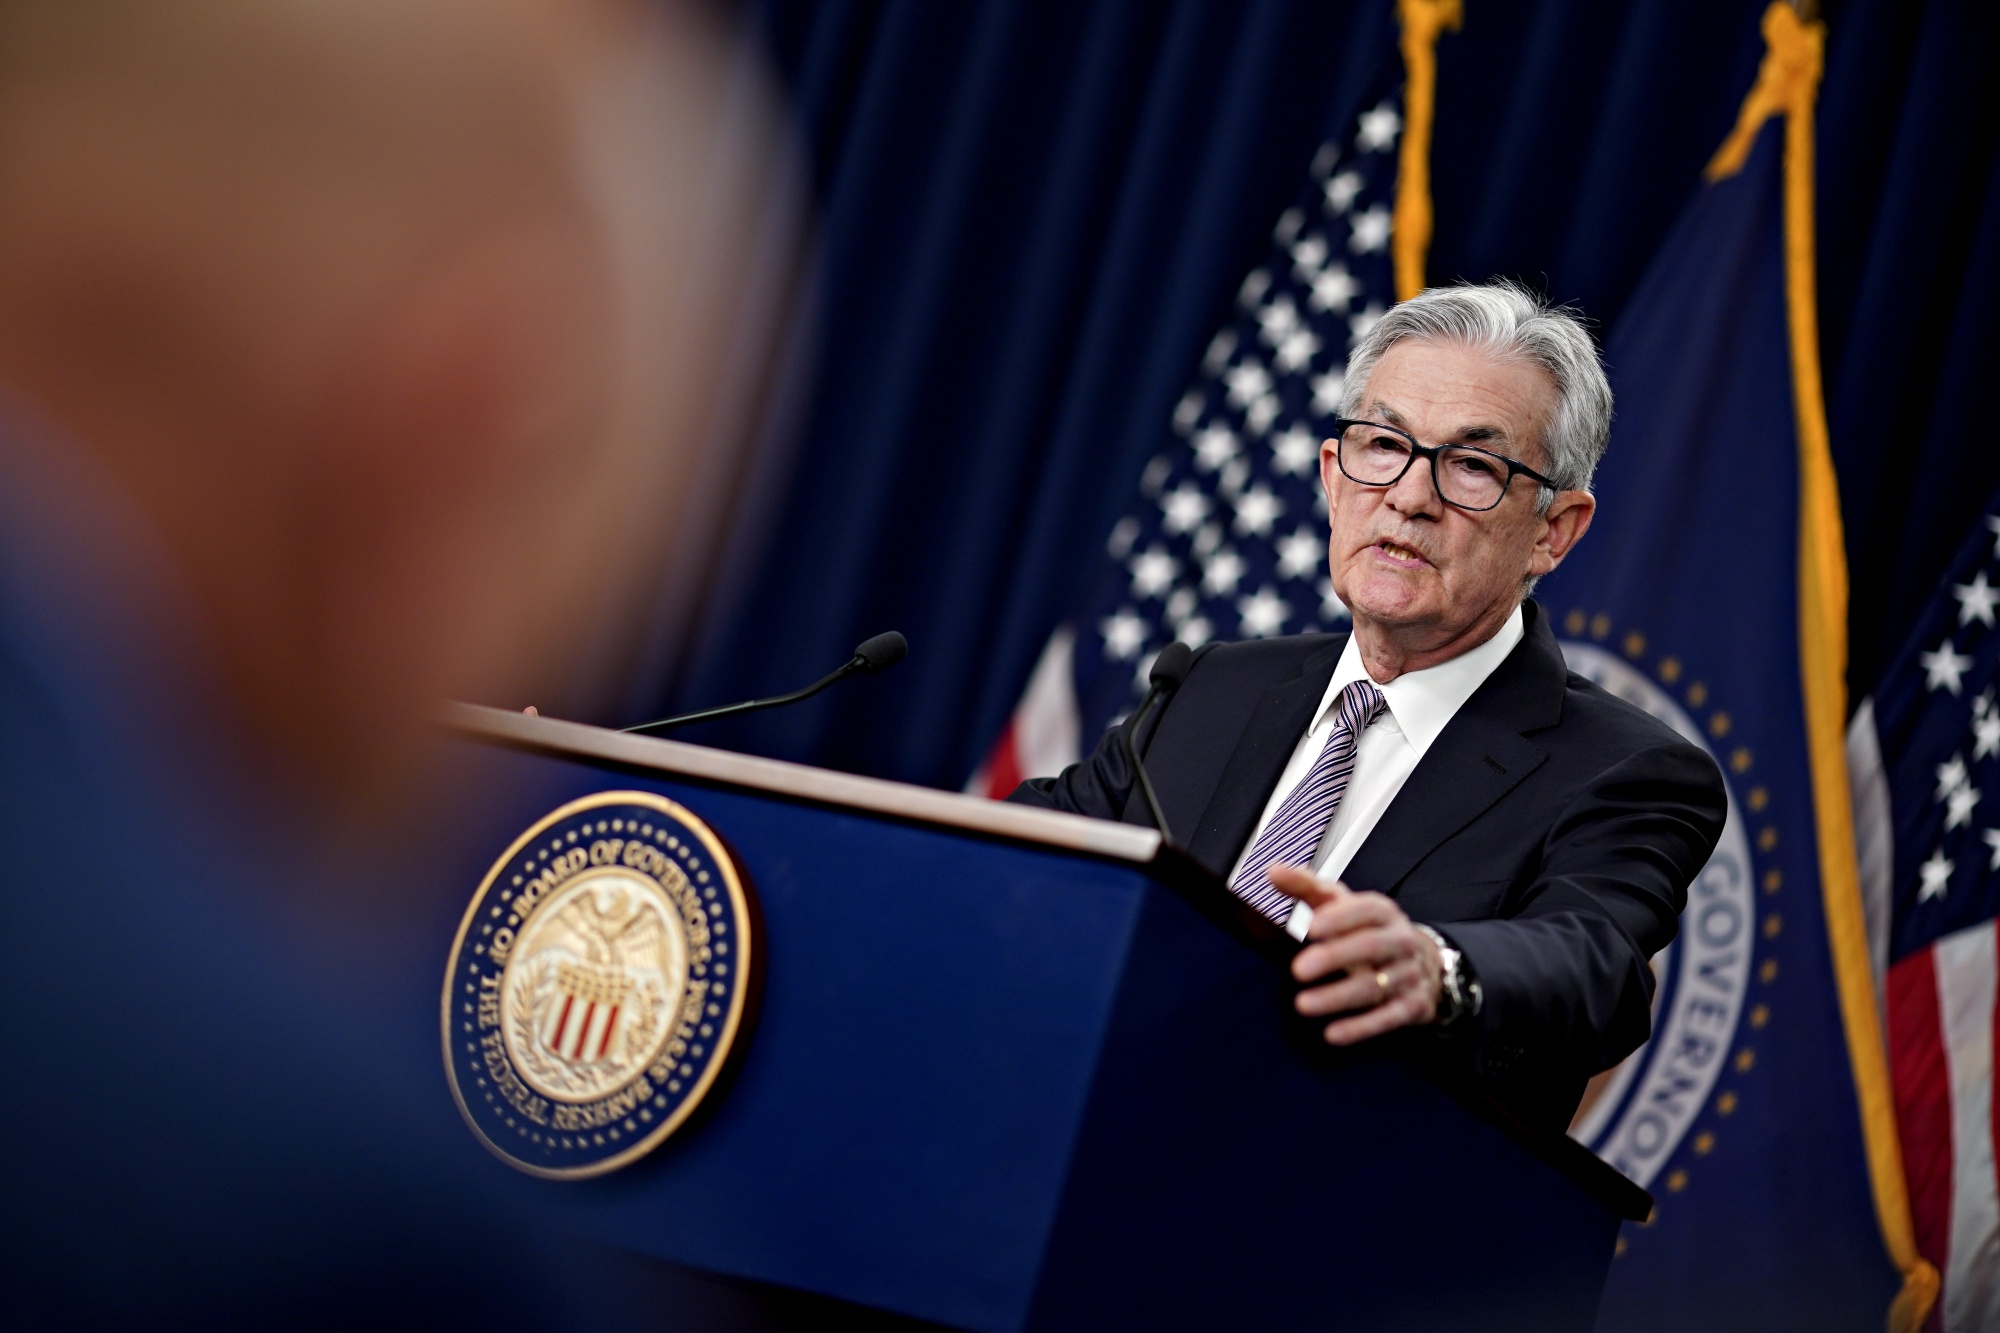 Fed's Logan: risks more balanced, no urgency on rate cuts